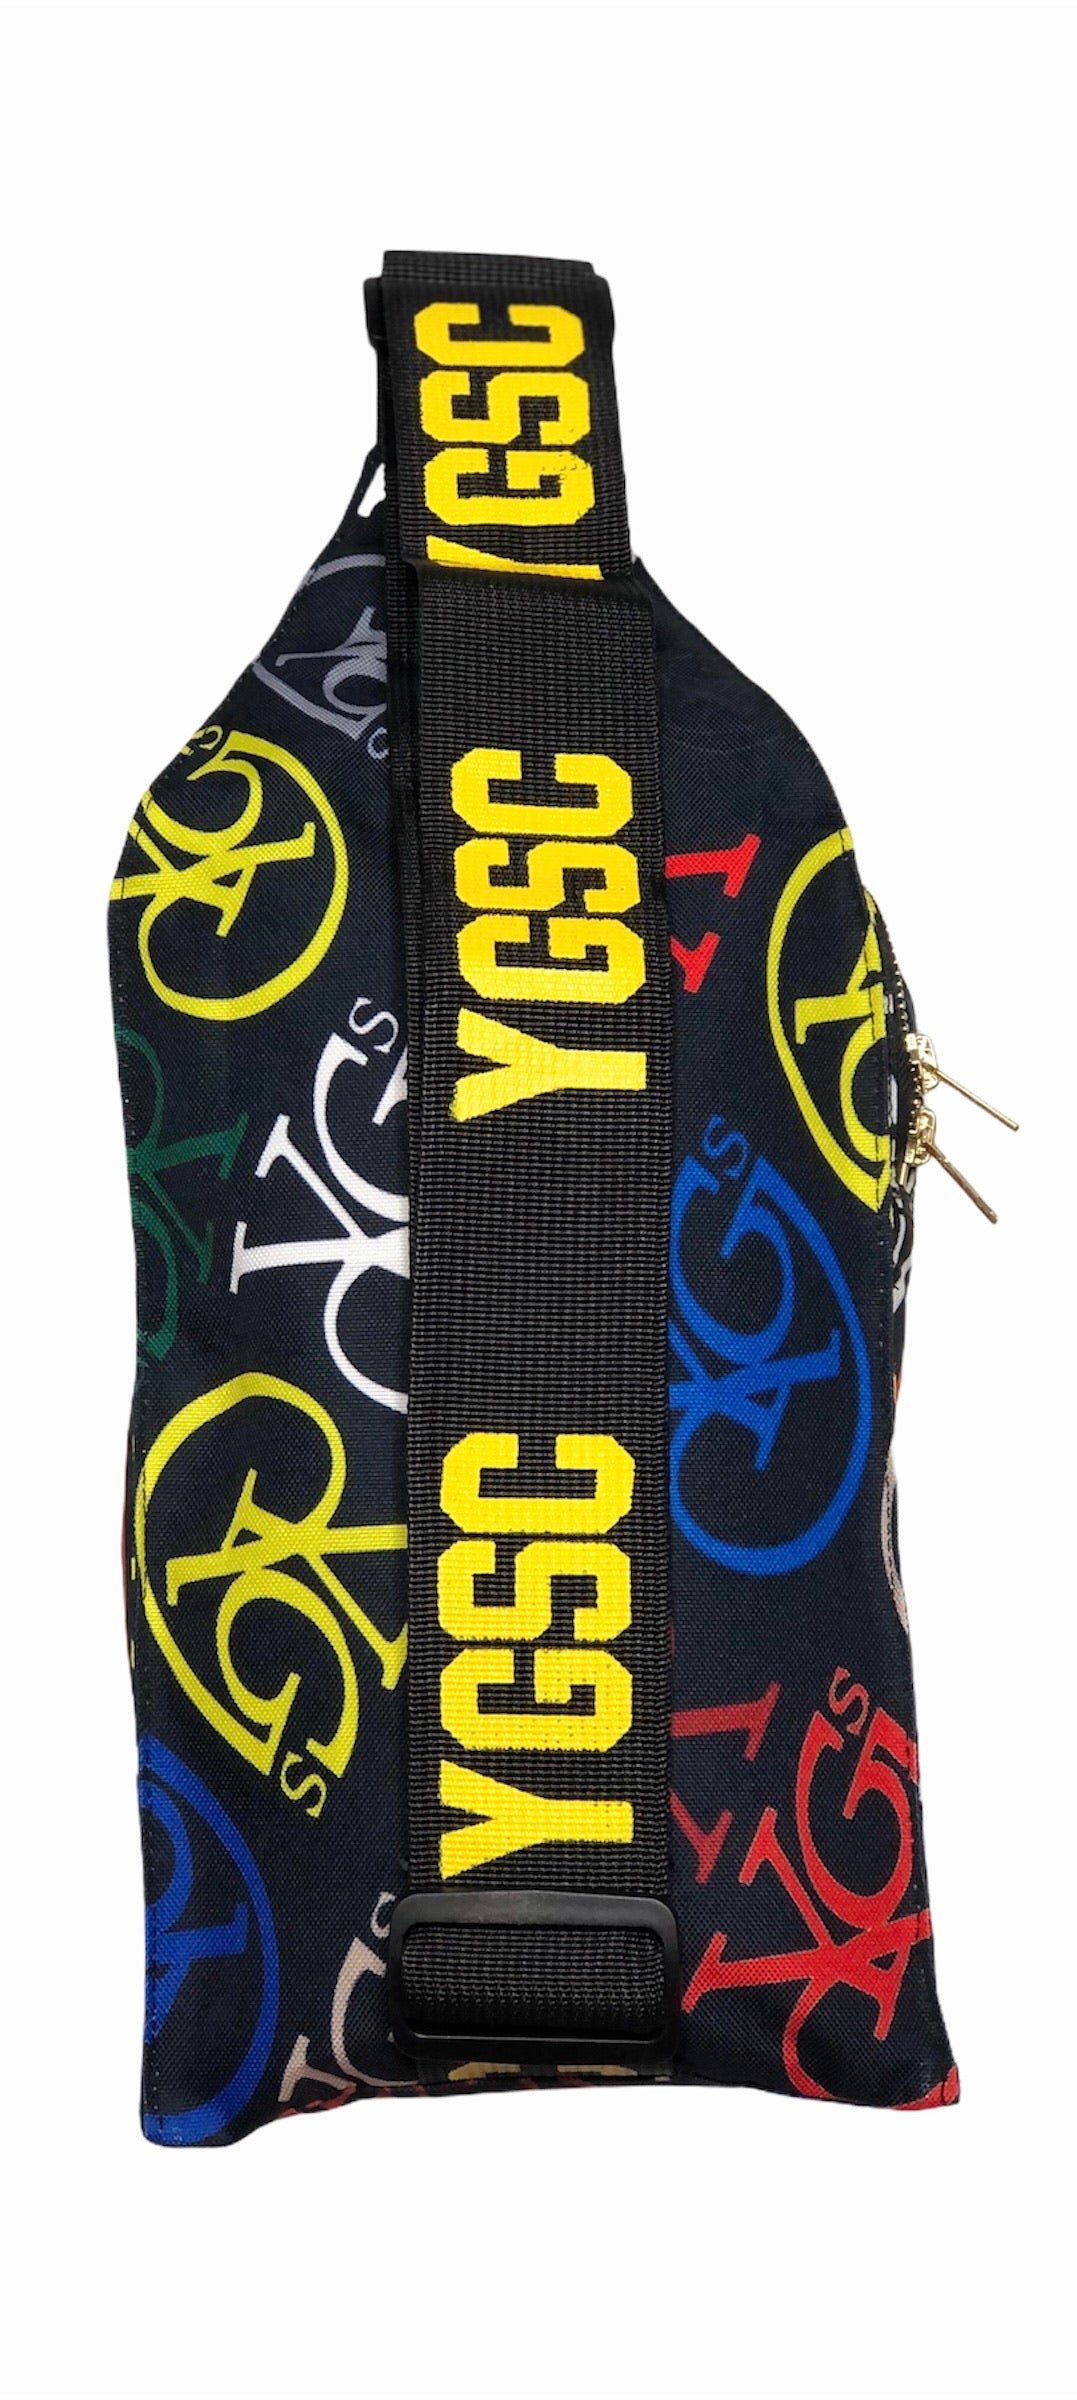 YGSC Monogram Cross-Body Bag